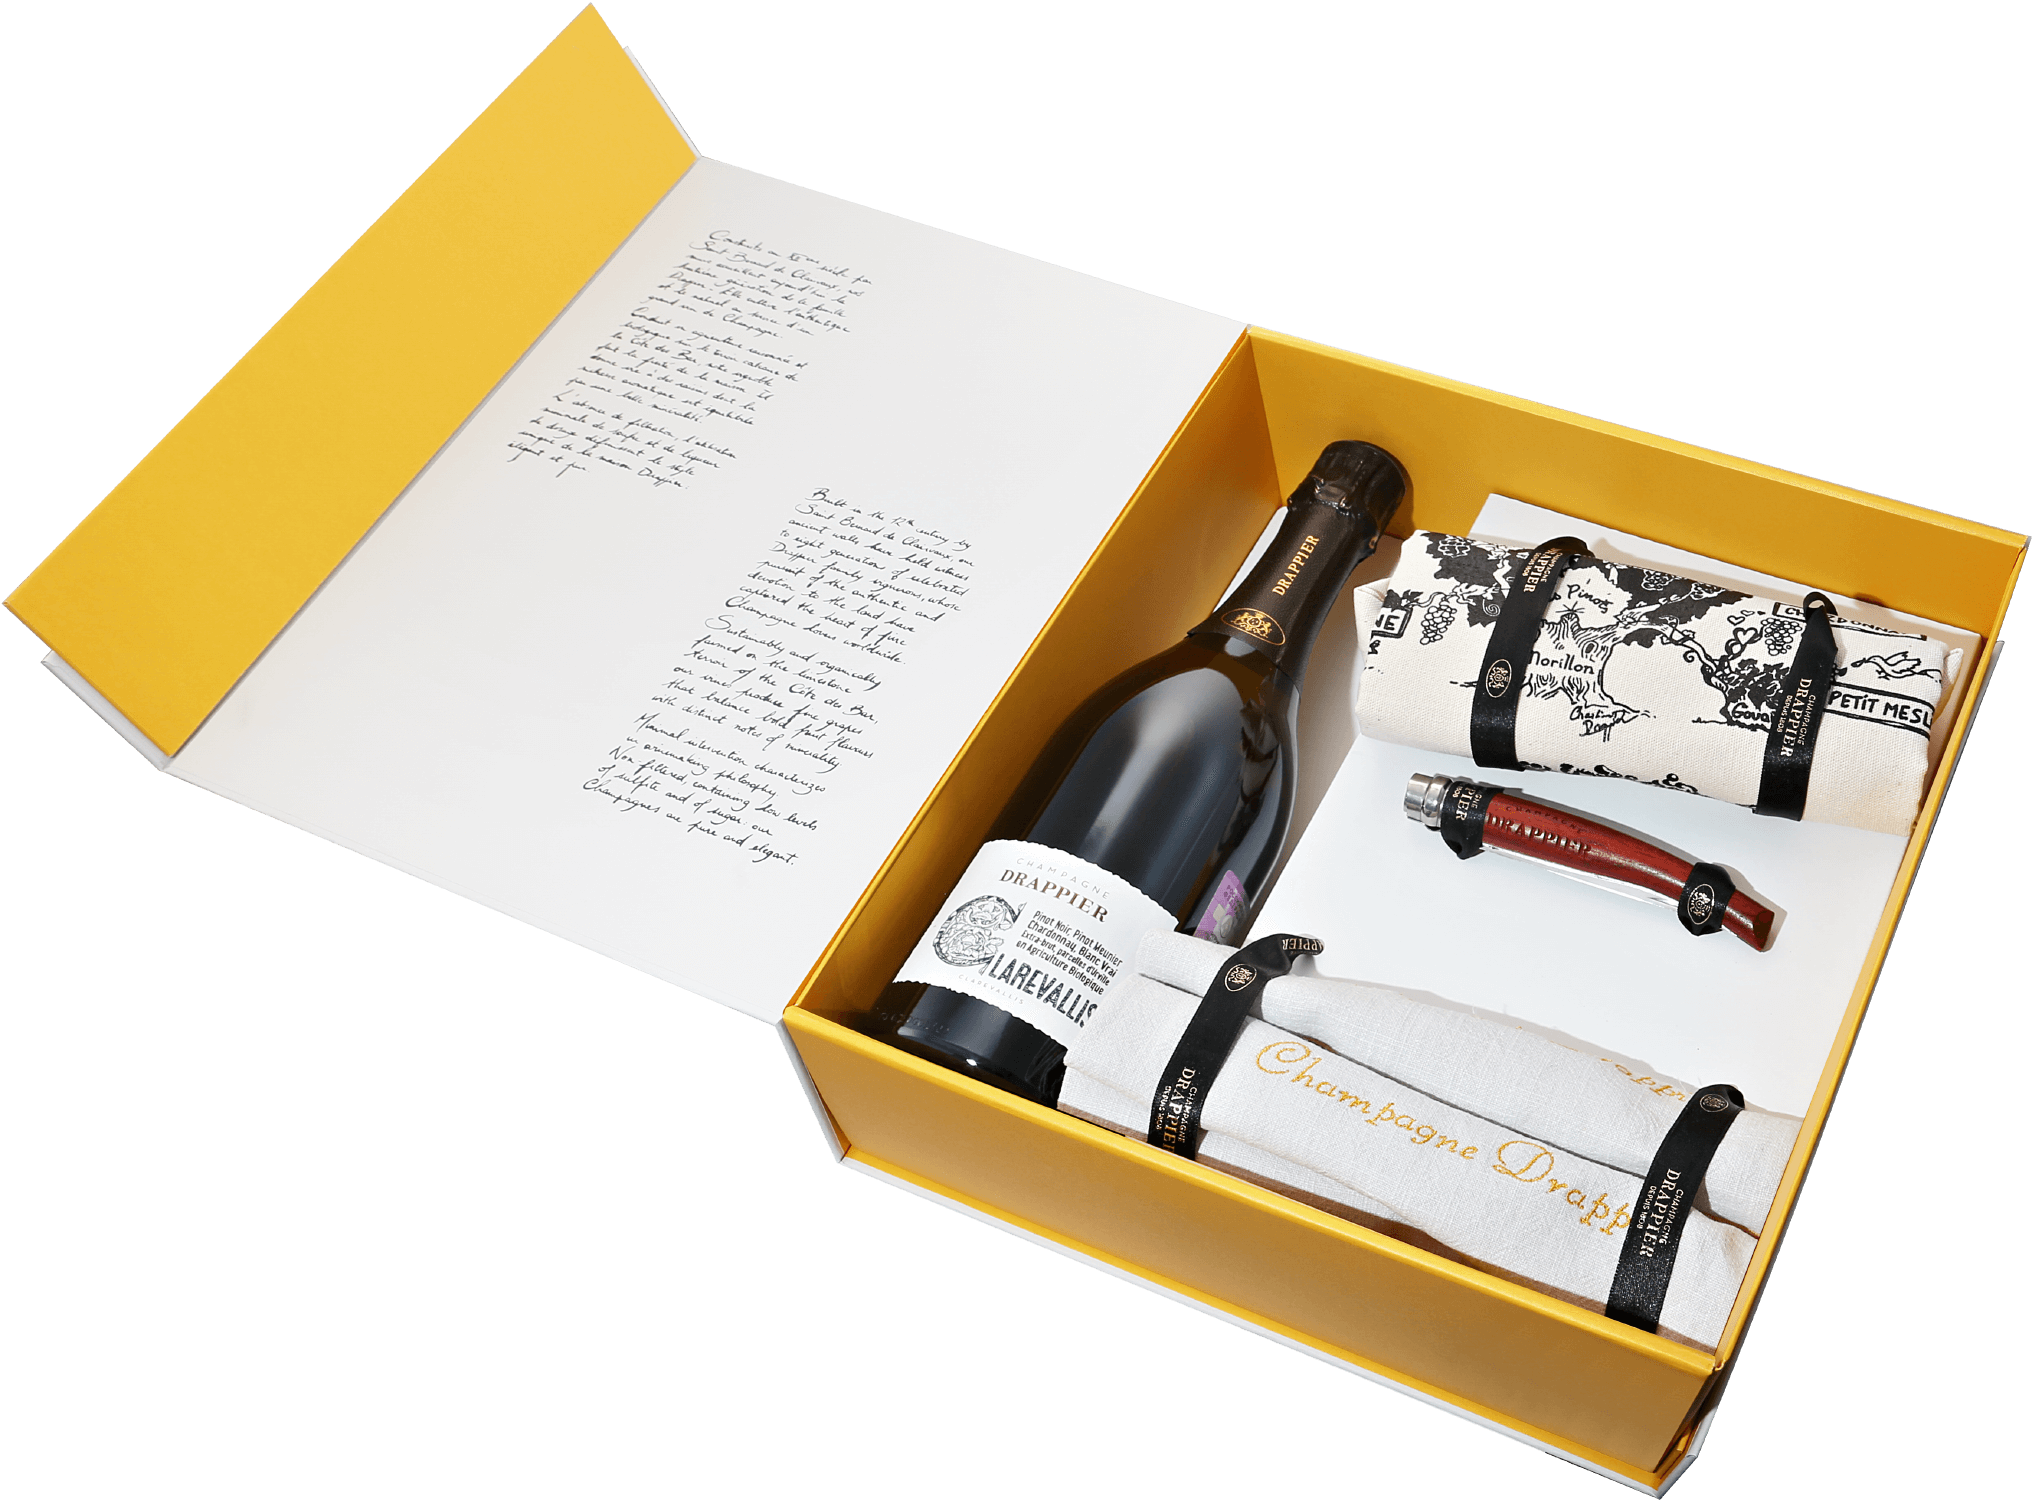 Drappier Clarevallis Champagne AOC (gift box) drappier carte d’or brut champagne aop in gift box with two glasses